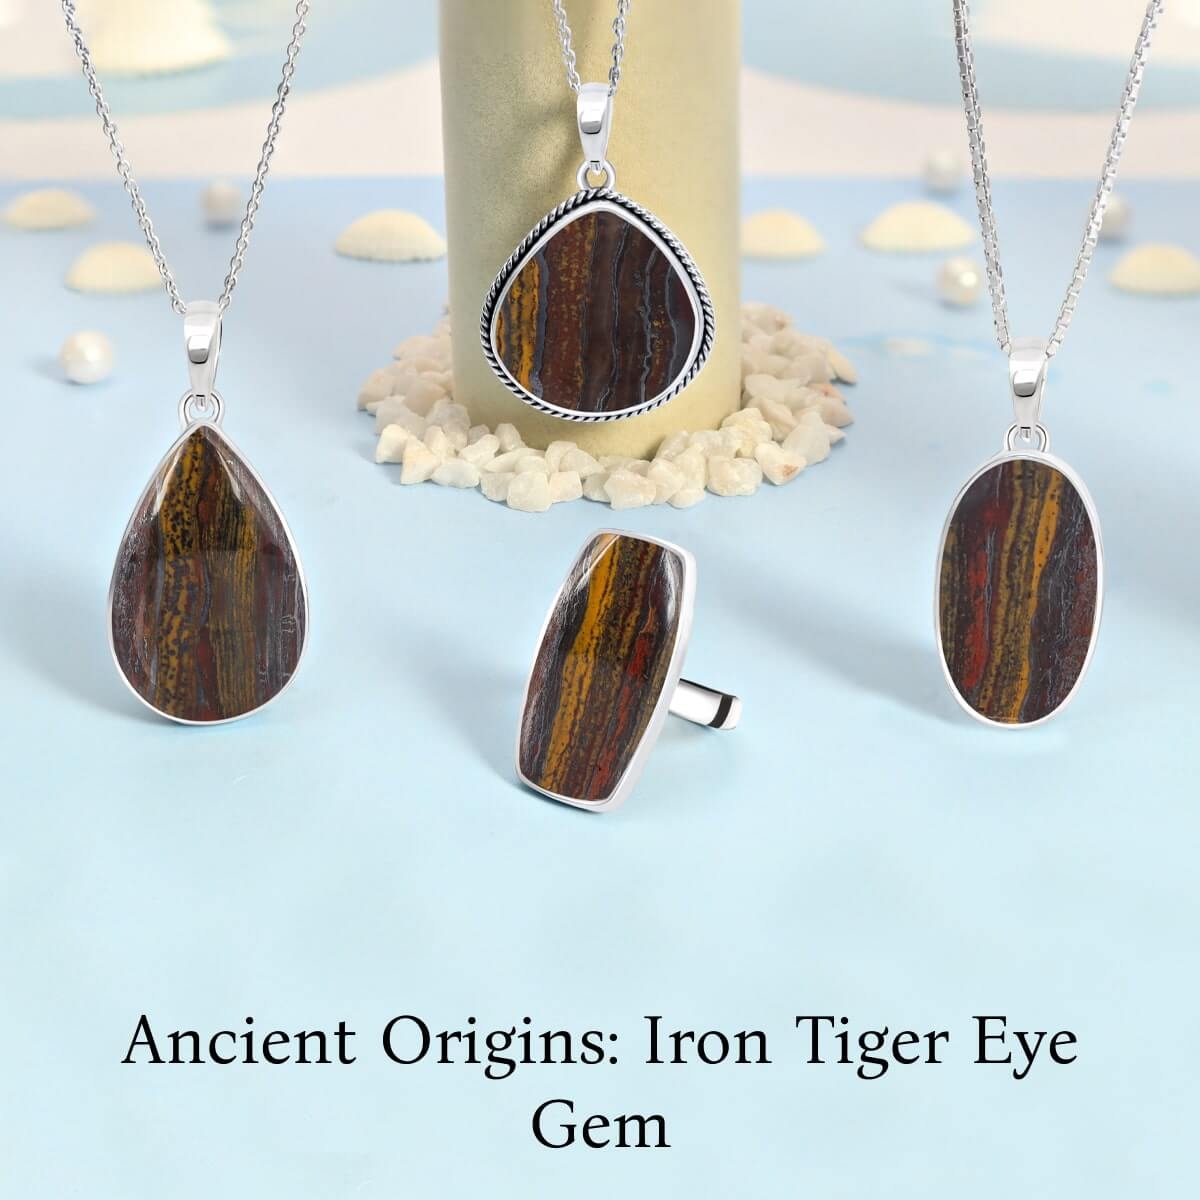 Iron Tiger Eye Gemstone History